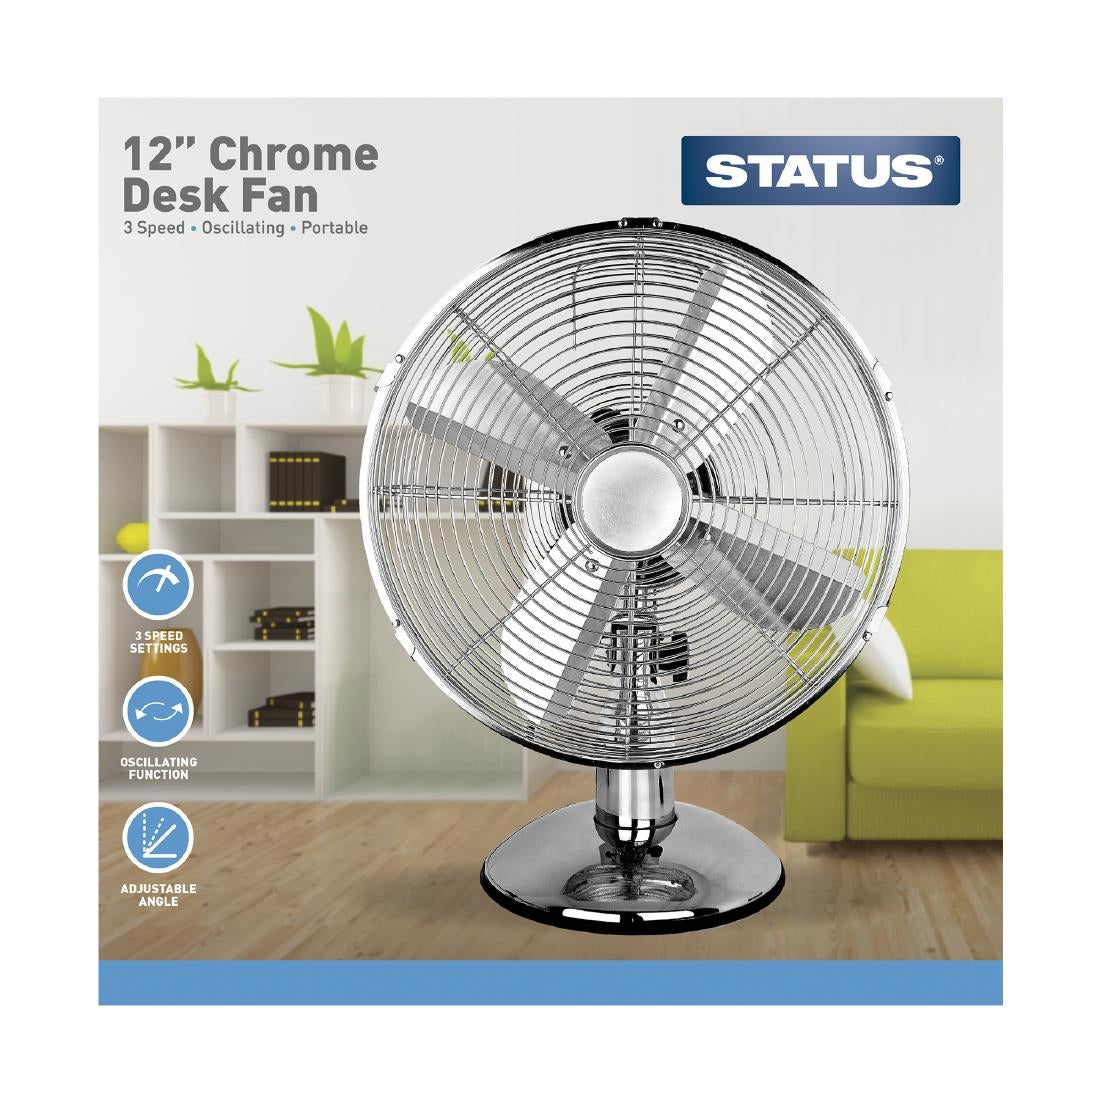 CR221 Status 12" Oscillating Chrome Desktop Fan